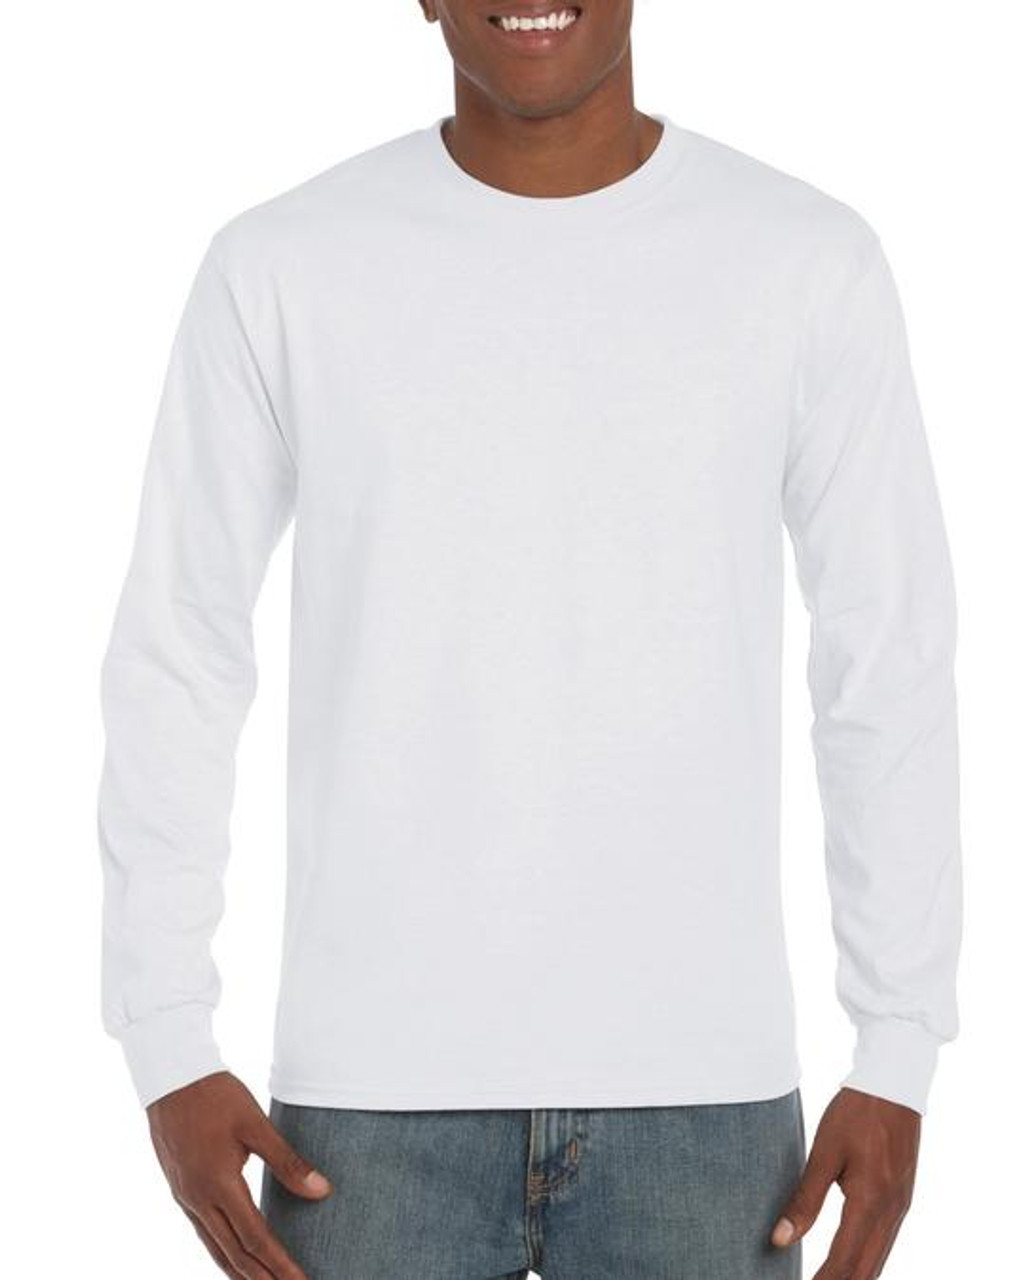 Laviva Sports 100% Polyester Sublimation T-Shirt Premium Quality Case White / X-Large / 1 Box